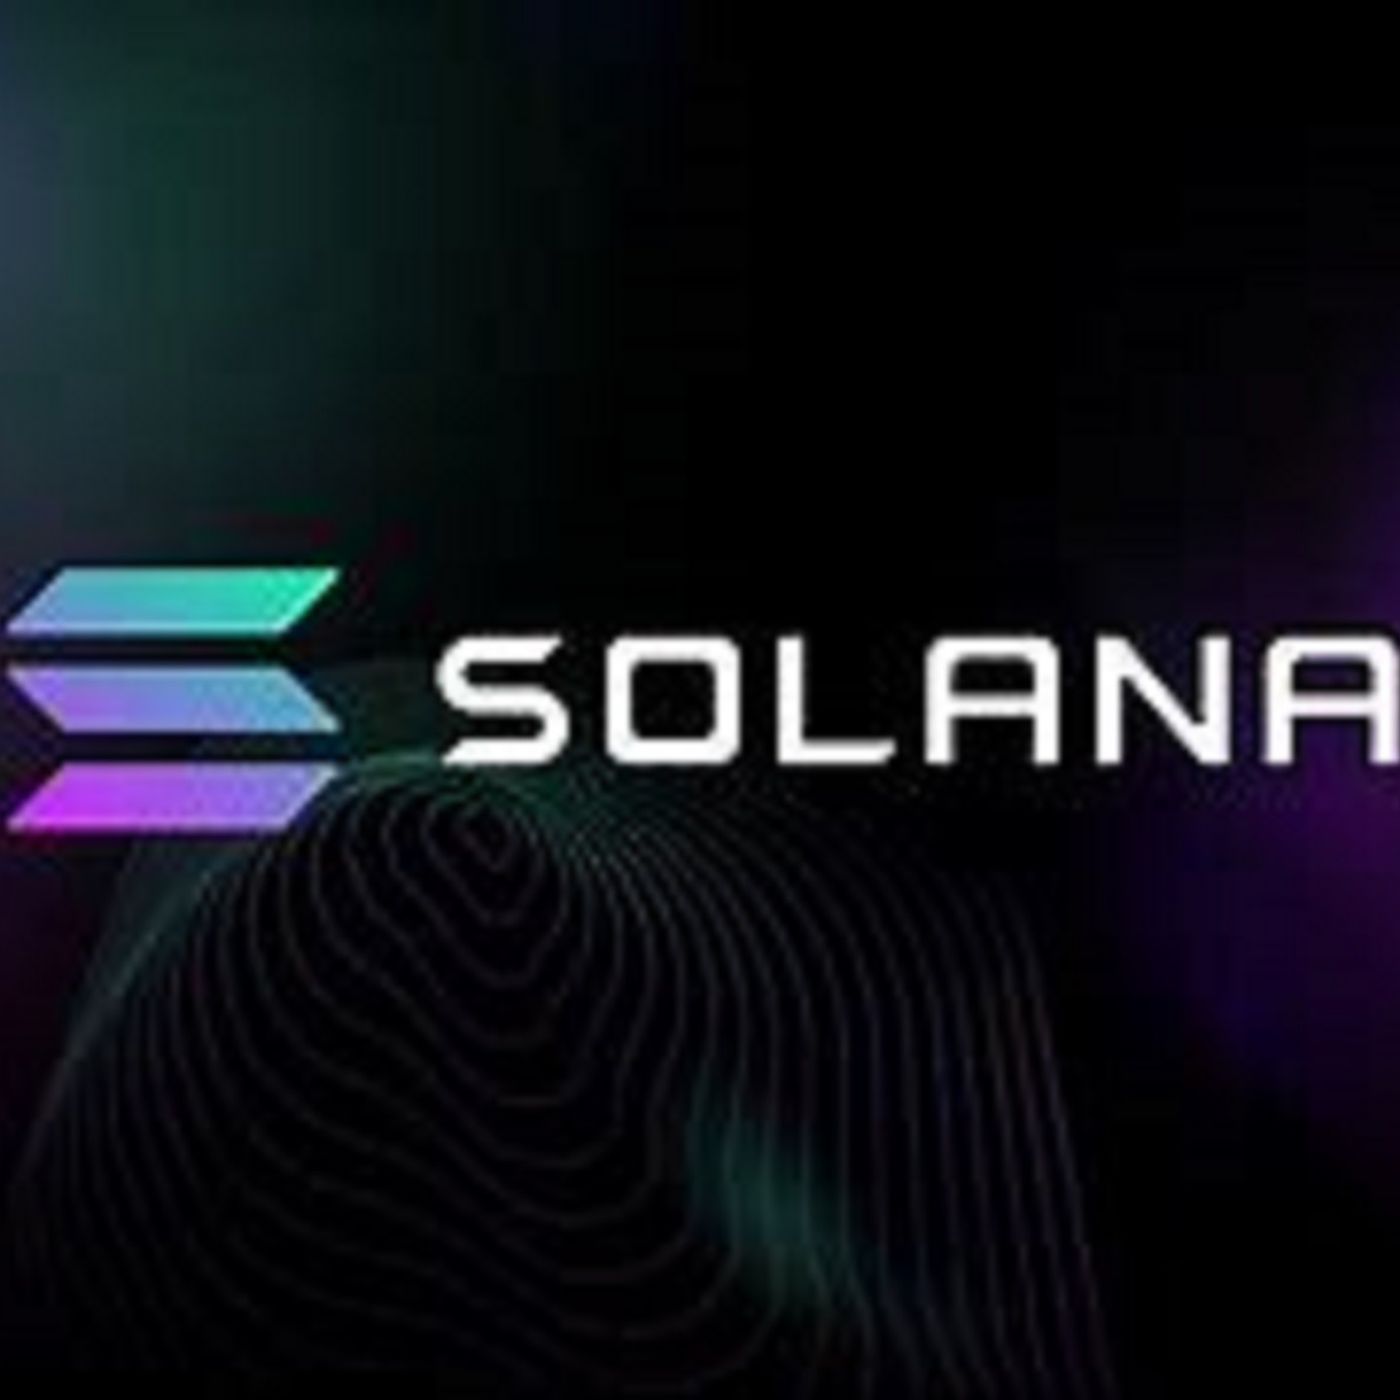 SOL Price Crosses $200 Milestone, What’s Next For Solana?